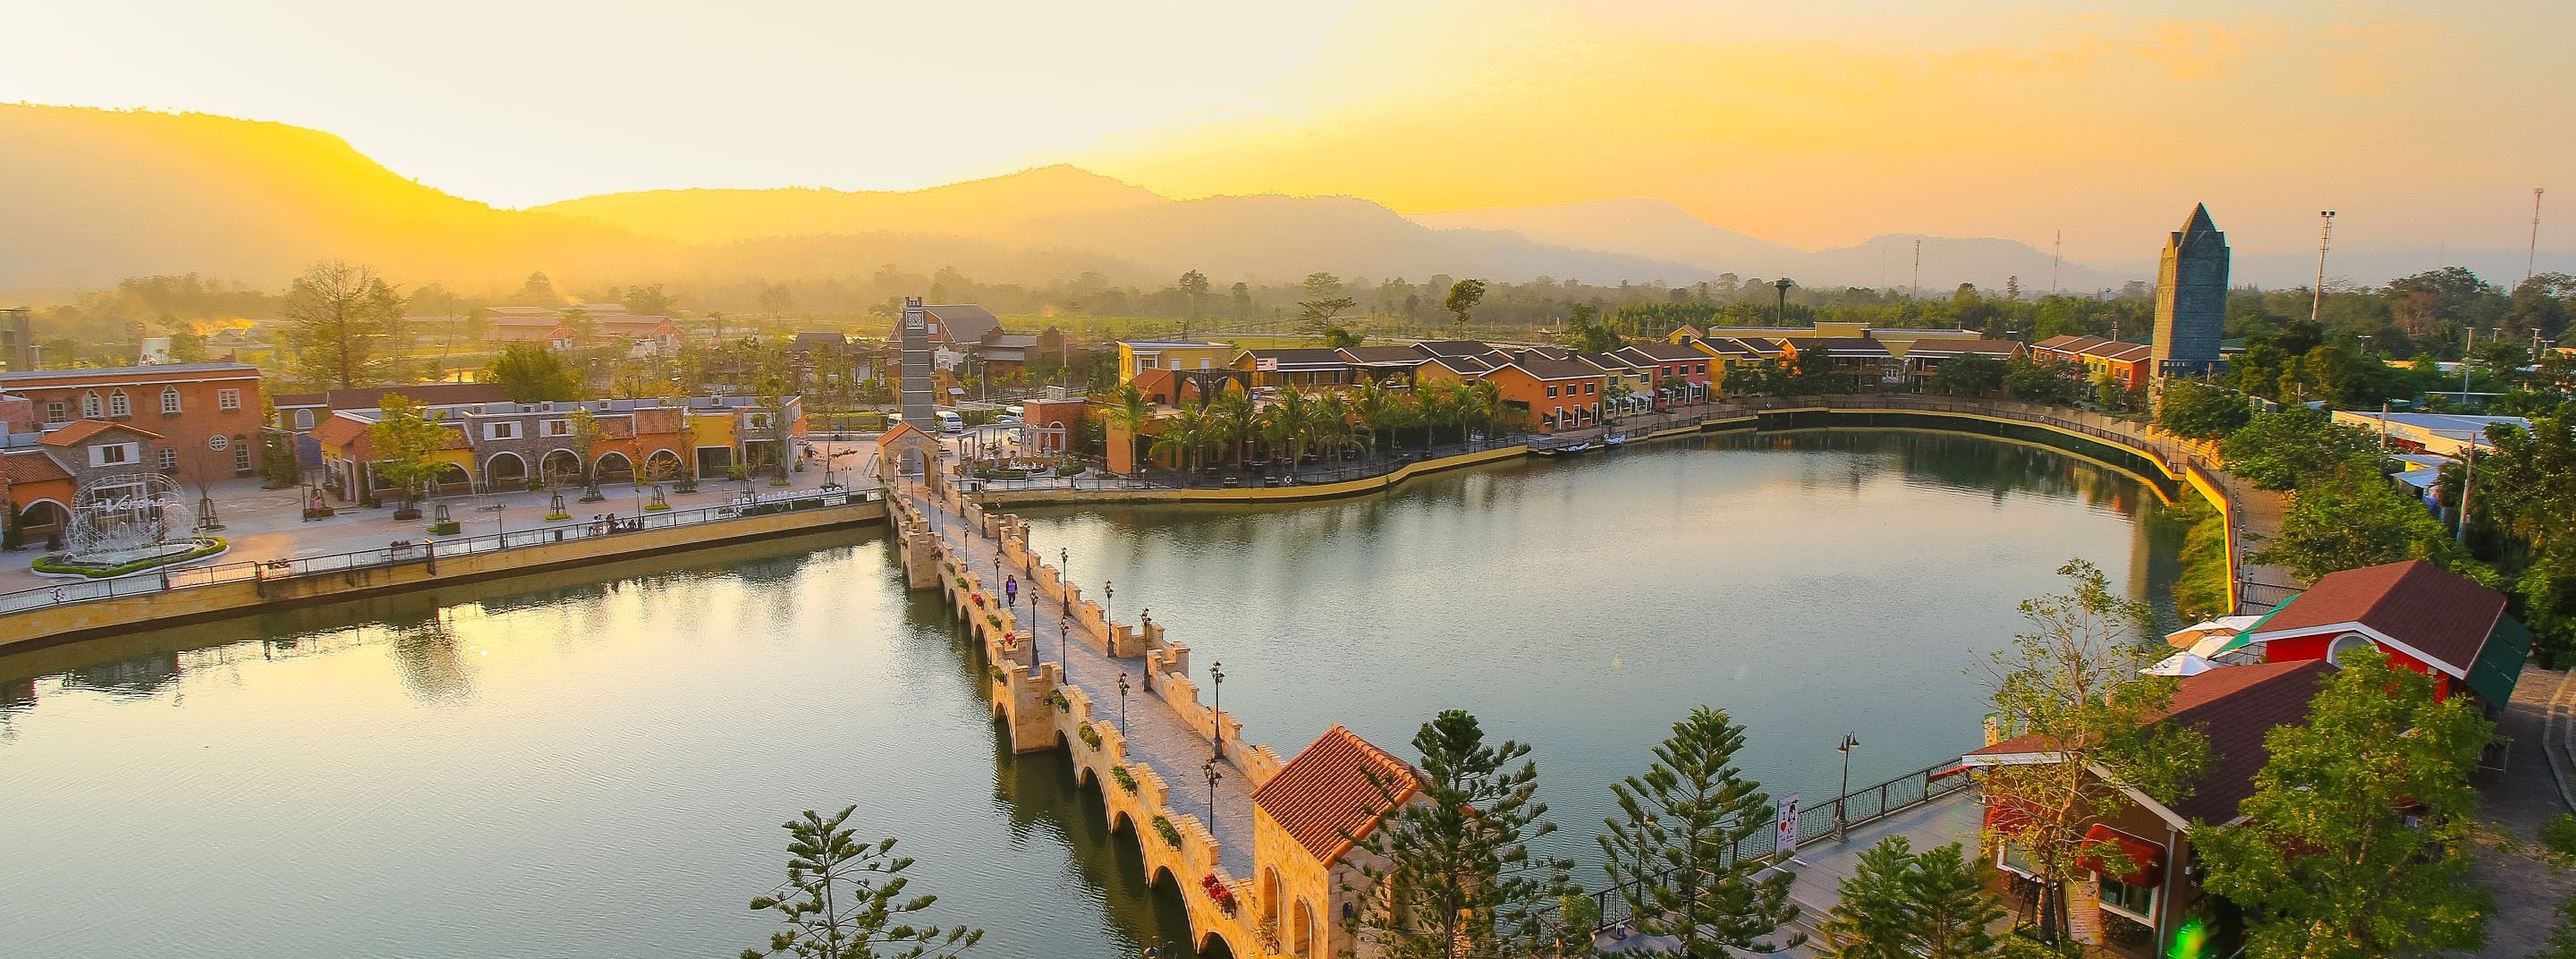 7 Tempat Wisata Di Thailand Yang Akan Membuat Kalian Serasa Di Eropa